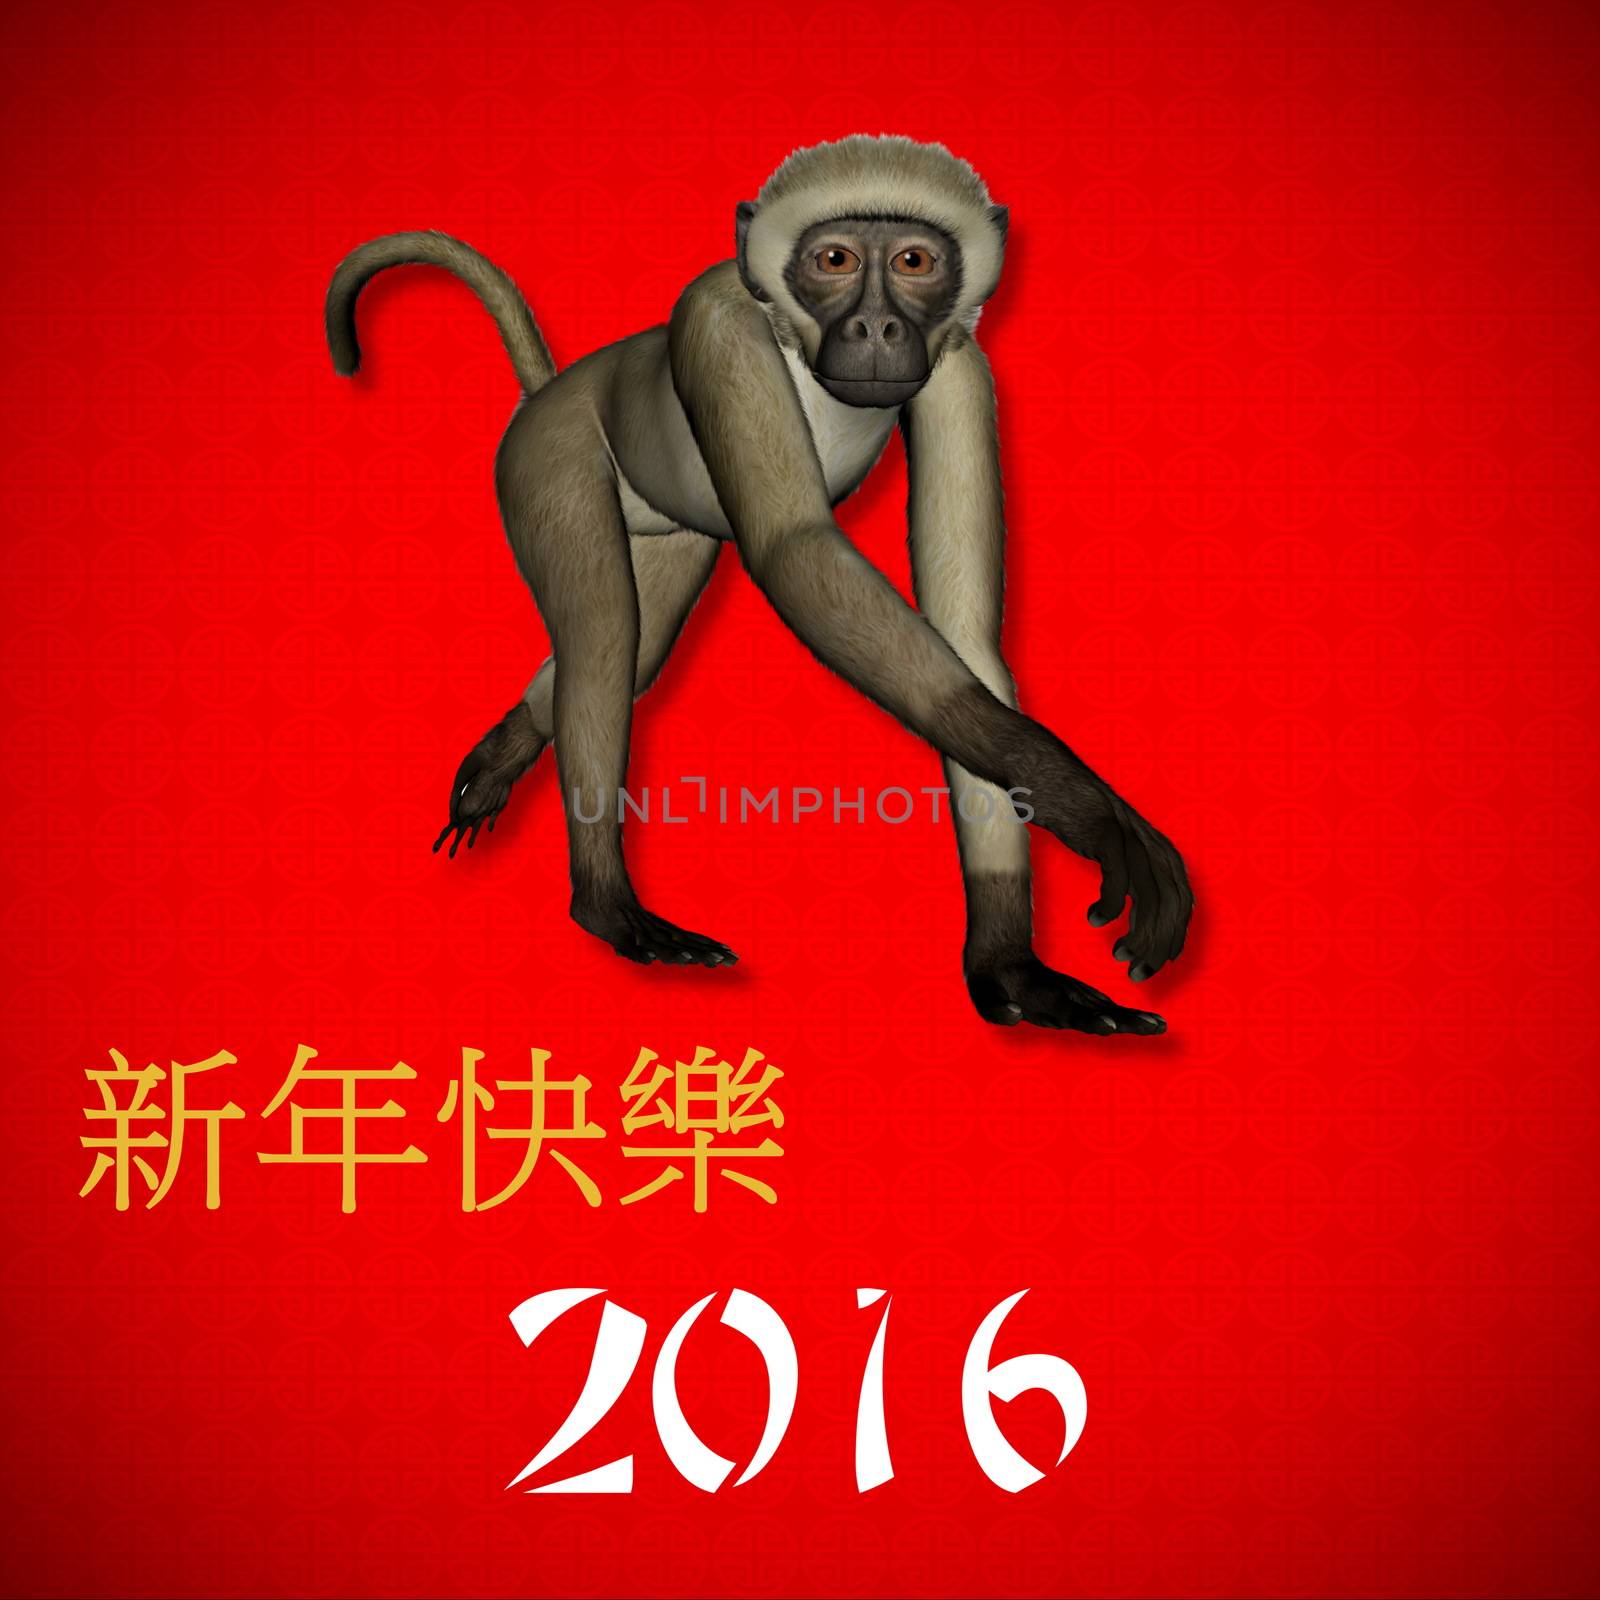 Happy New Chinese monkey Year, 2016 by Elenaphotos21